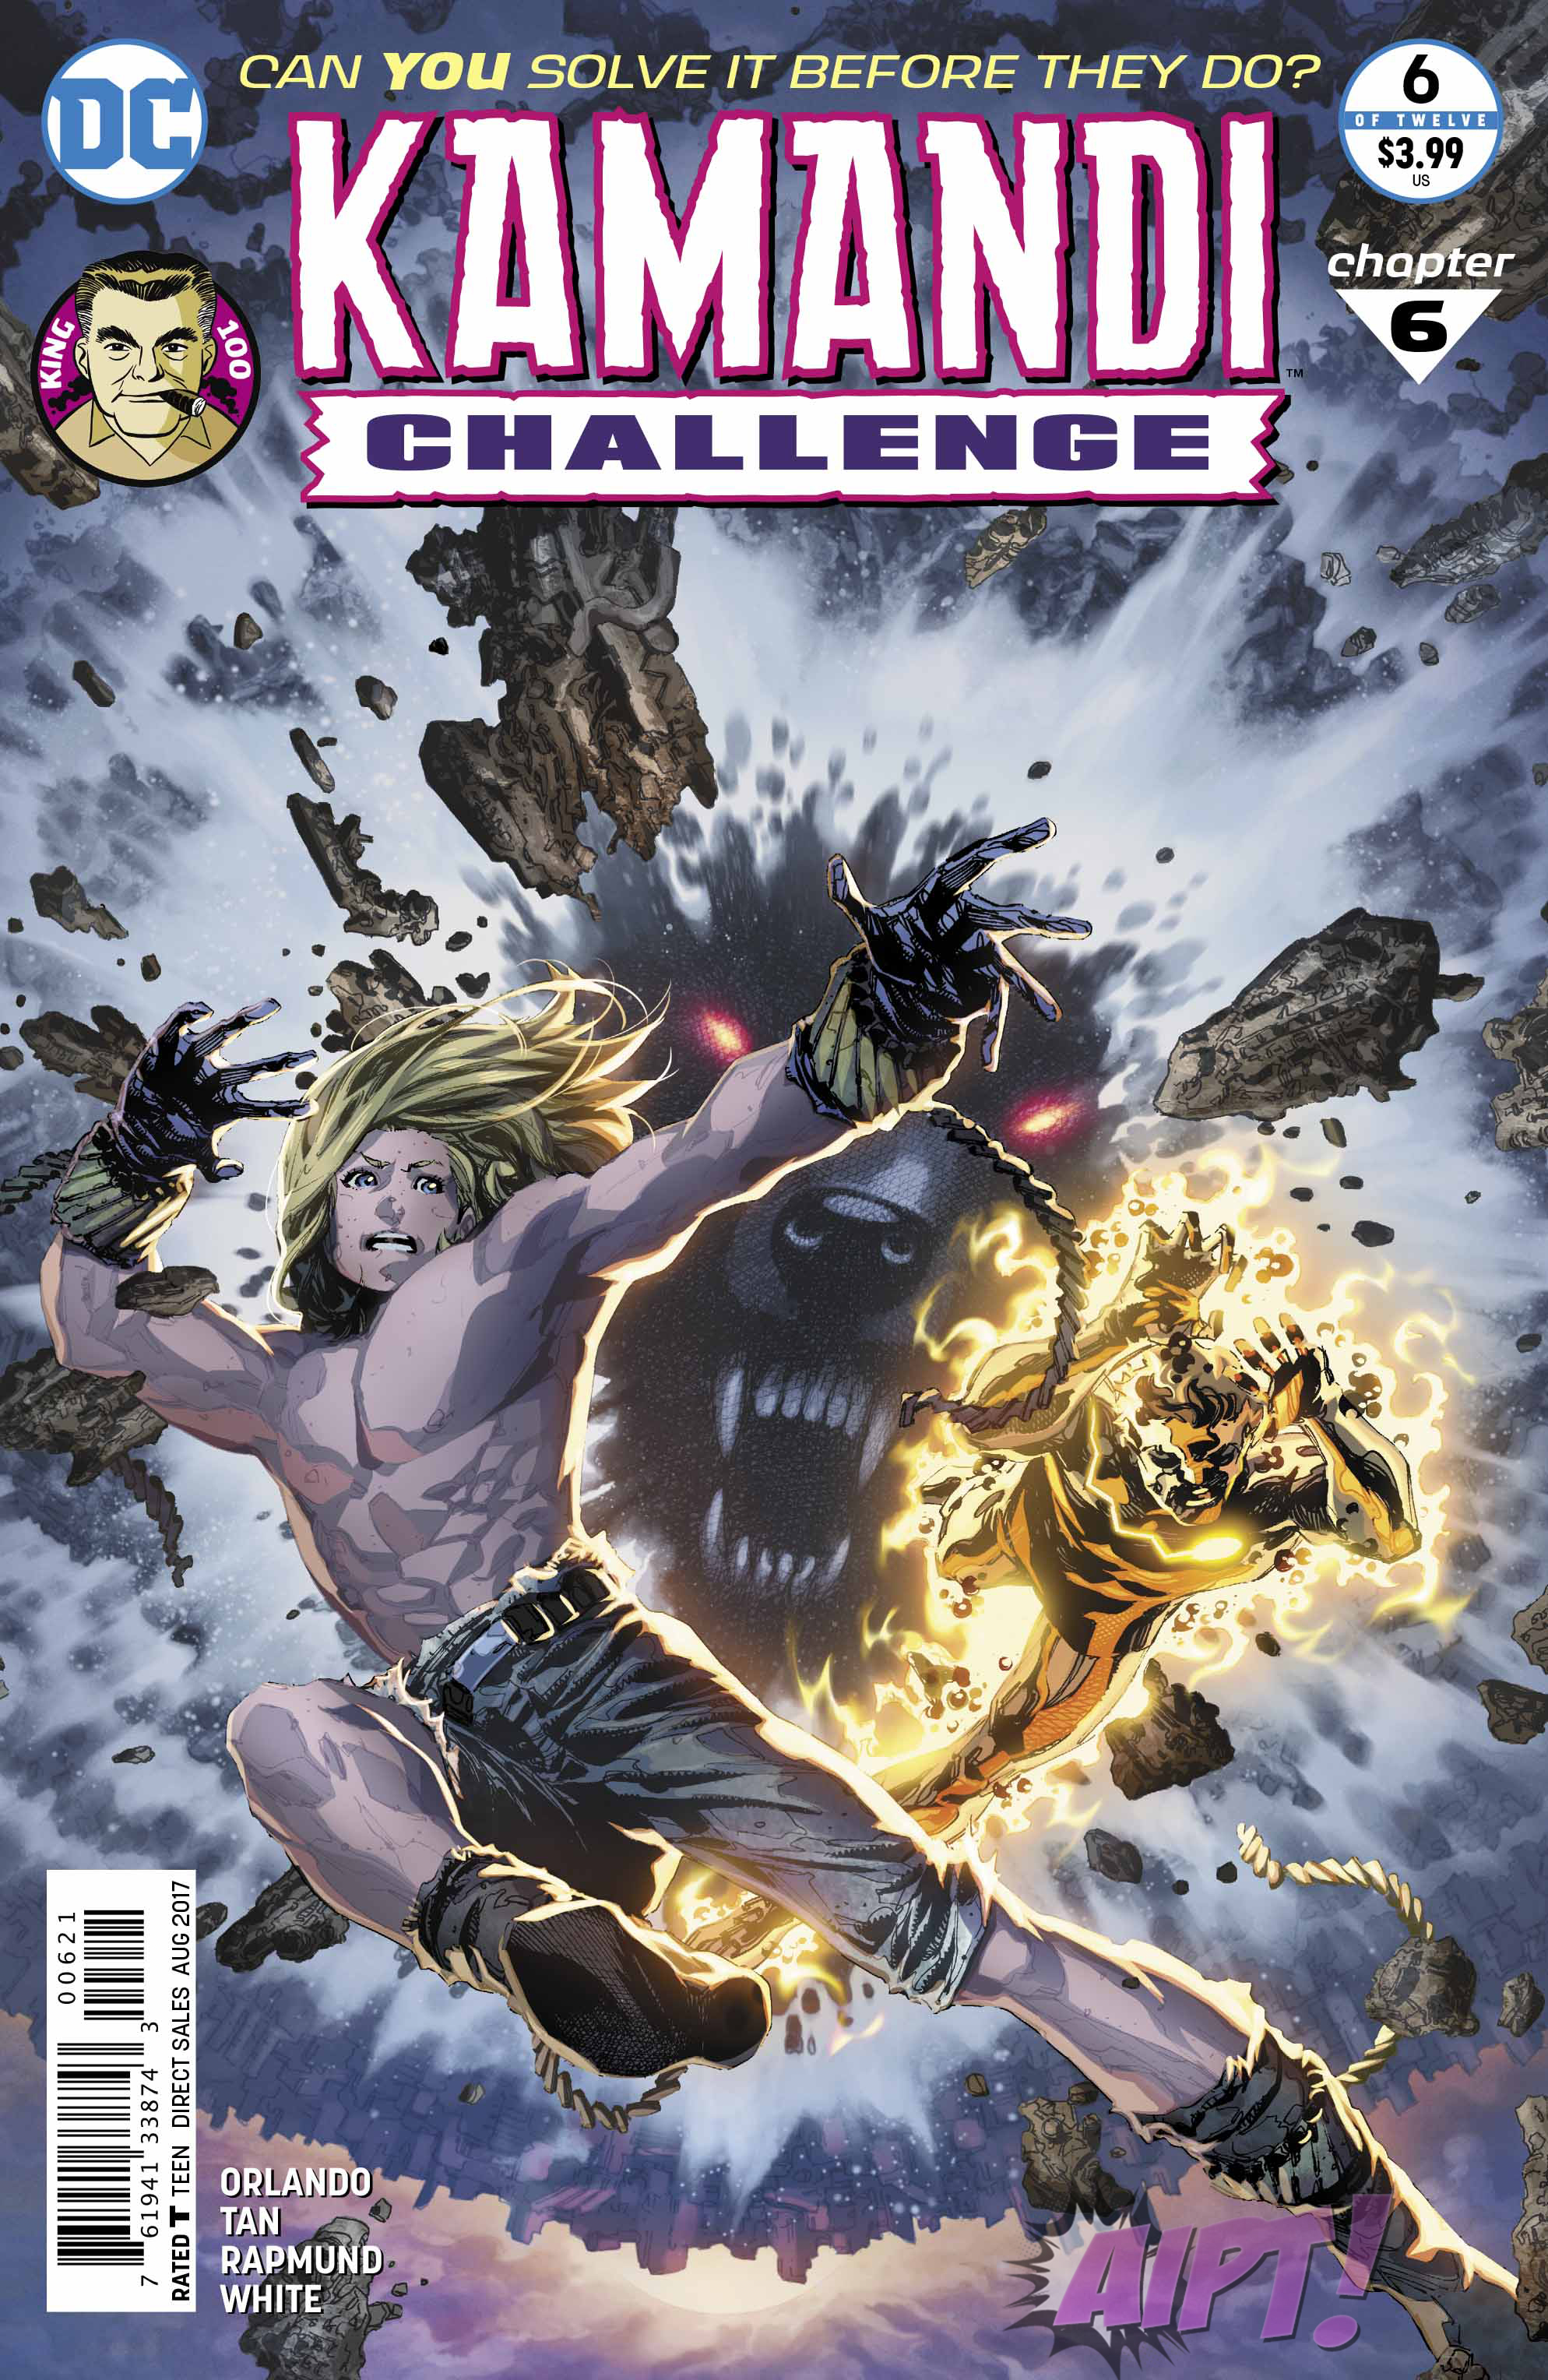 [EXCLUSIVE] DC Preview: Kamandi Challenge #6